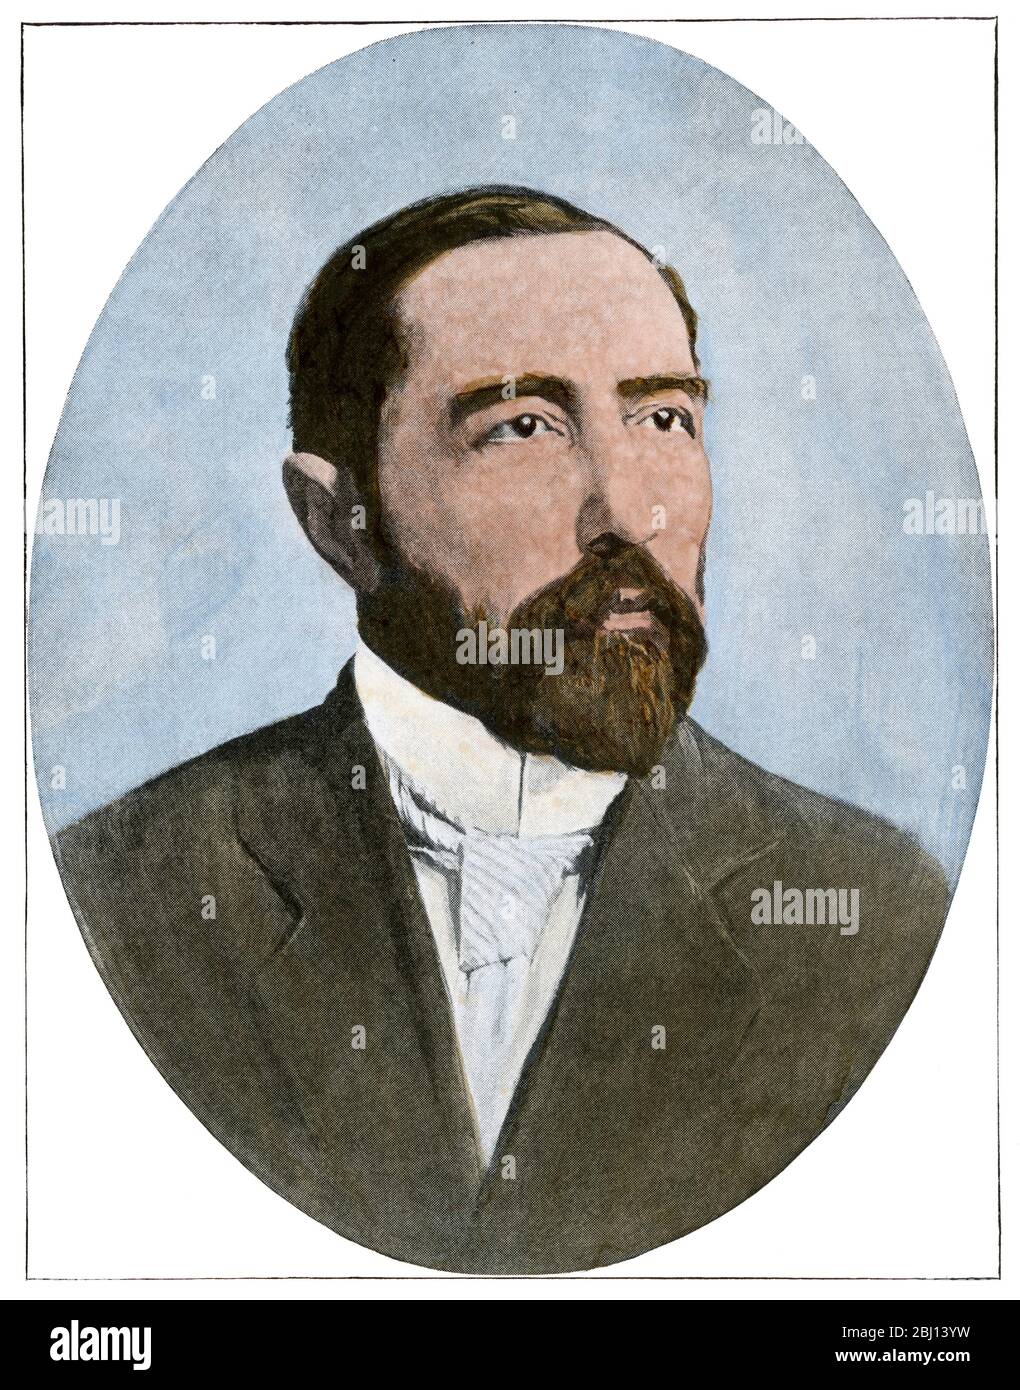 Author Joseph Conrad. Hand-colored halftone of an illustration Stock Photo